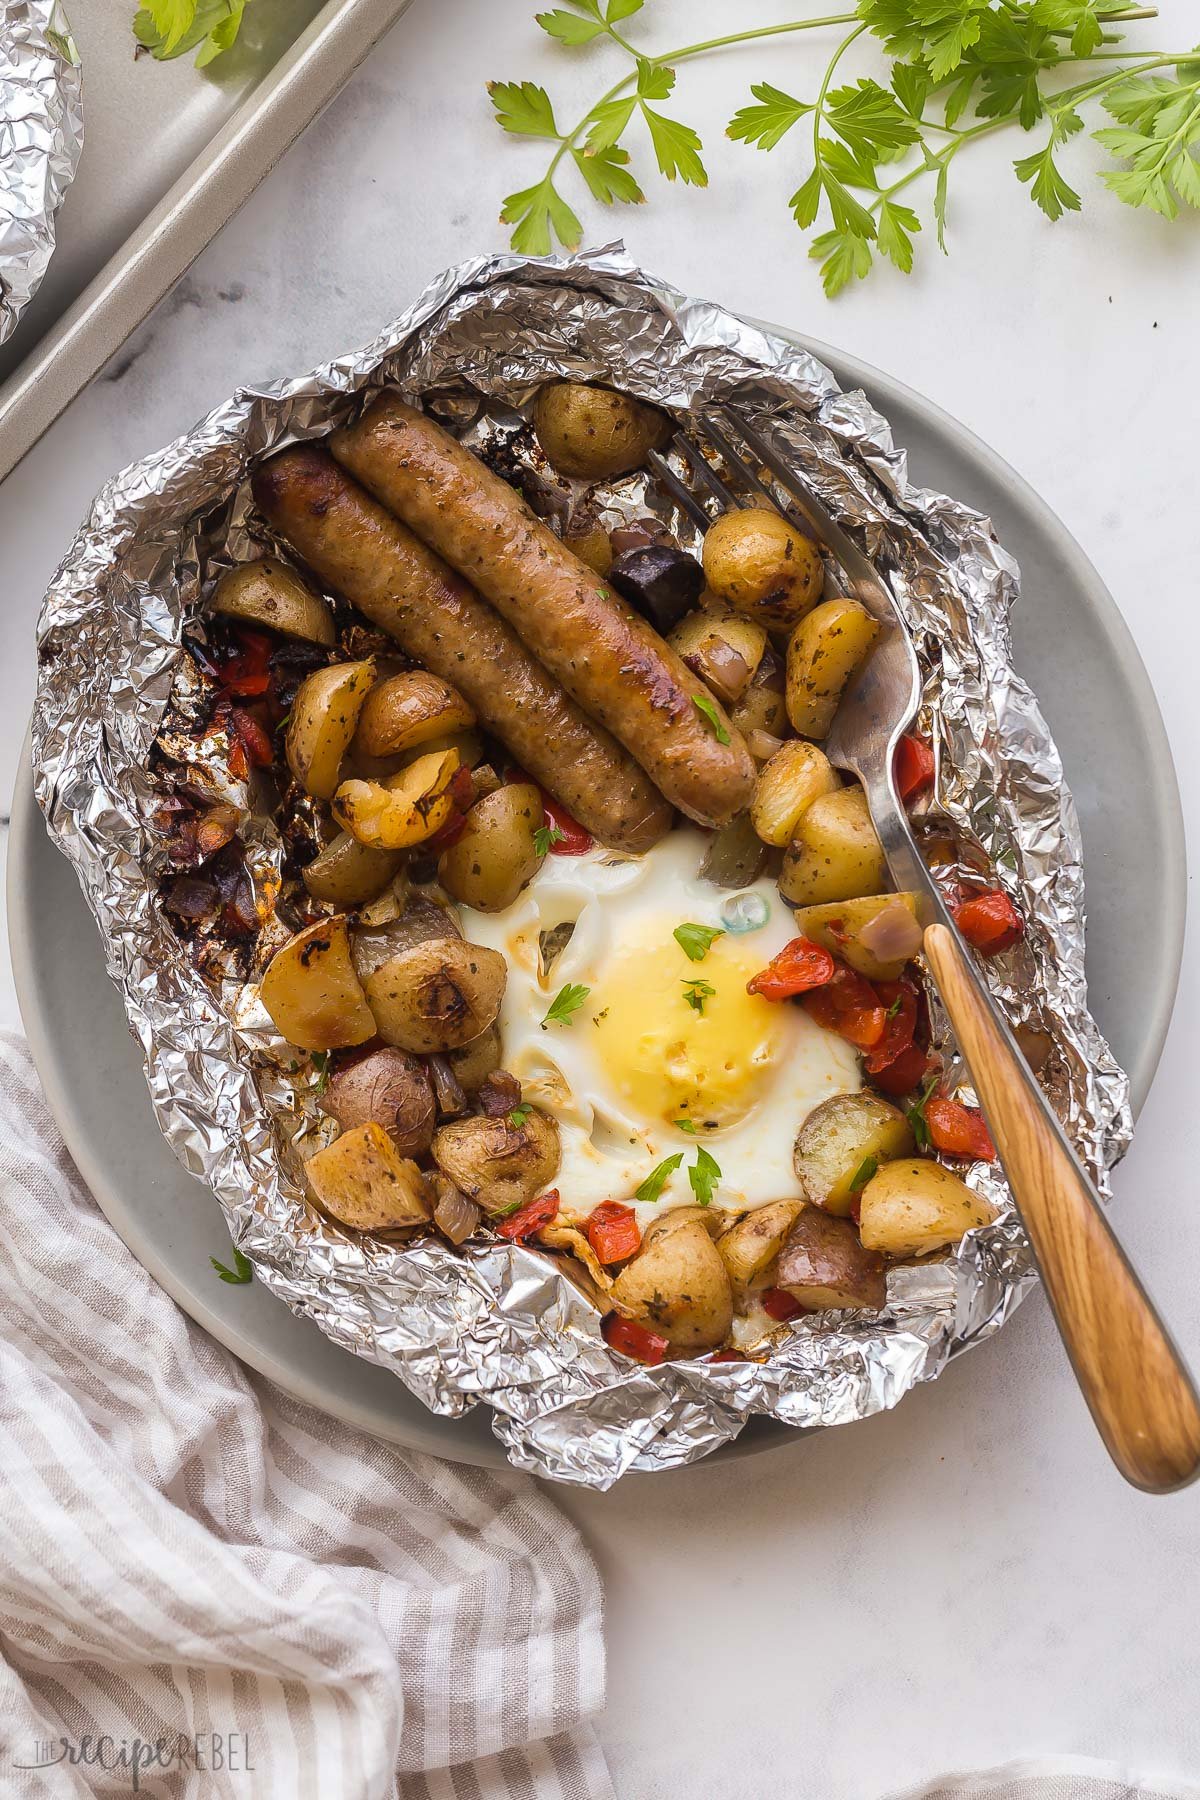 11 Campfire Foil Recipes We Love for Convenient Meals